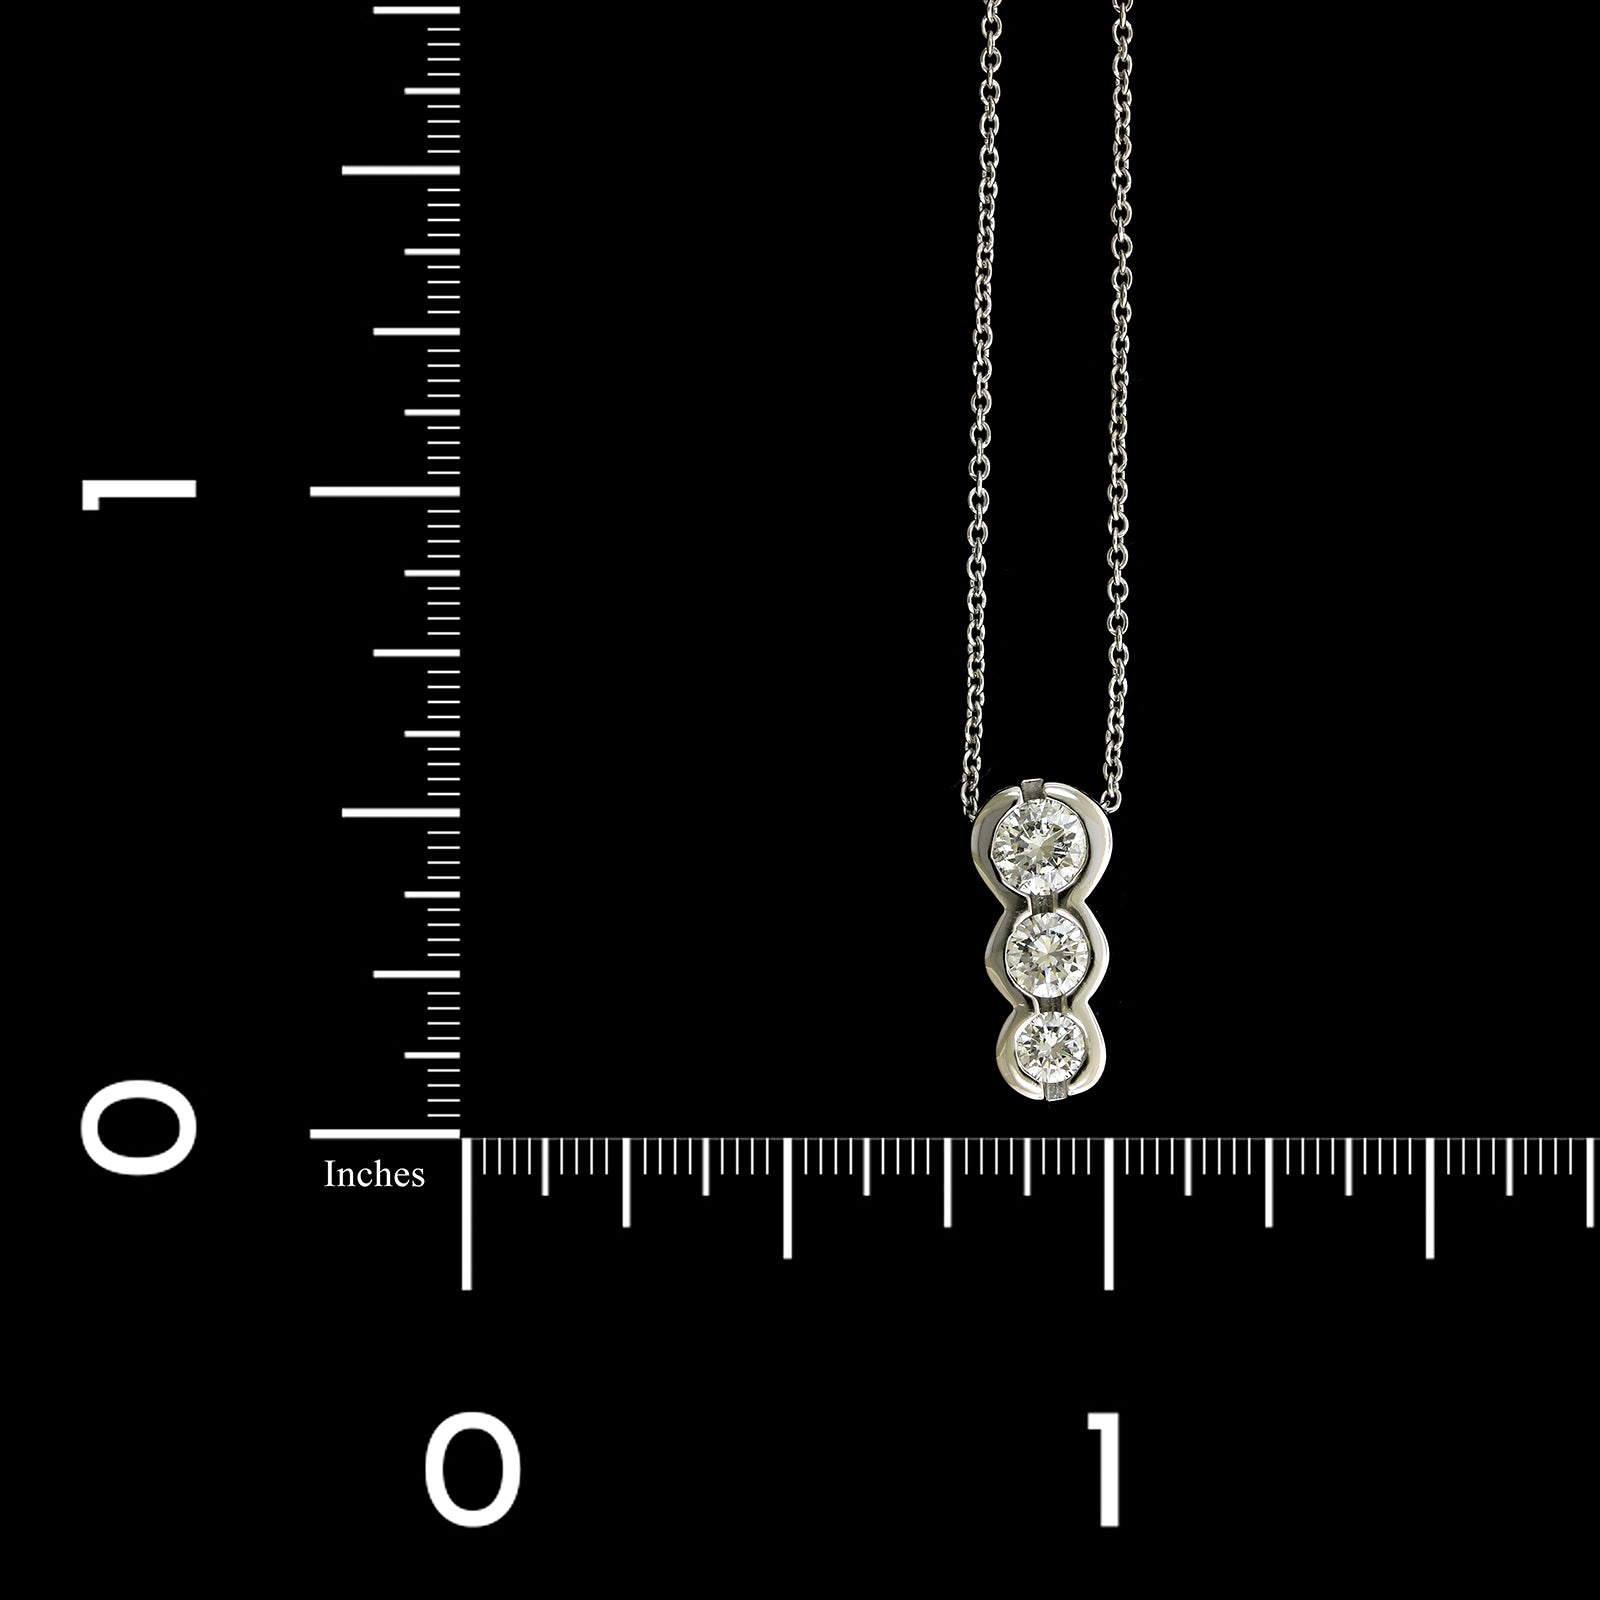 18K White Gold Estate Diamond Pendant Necklace